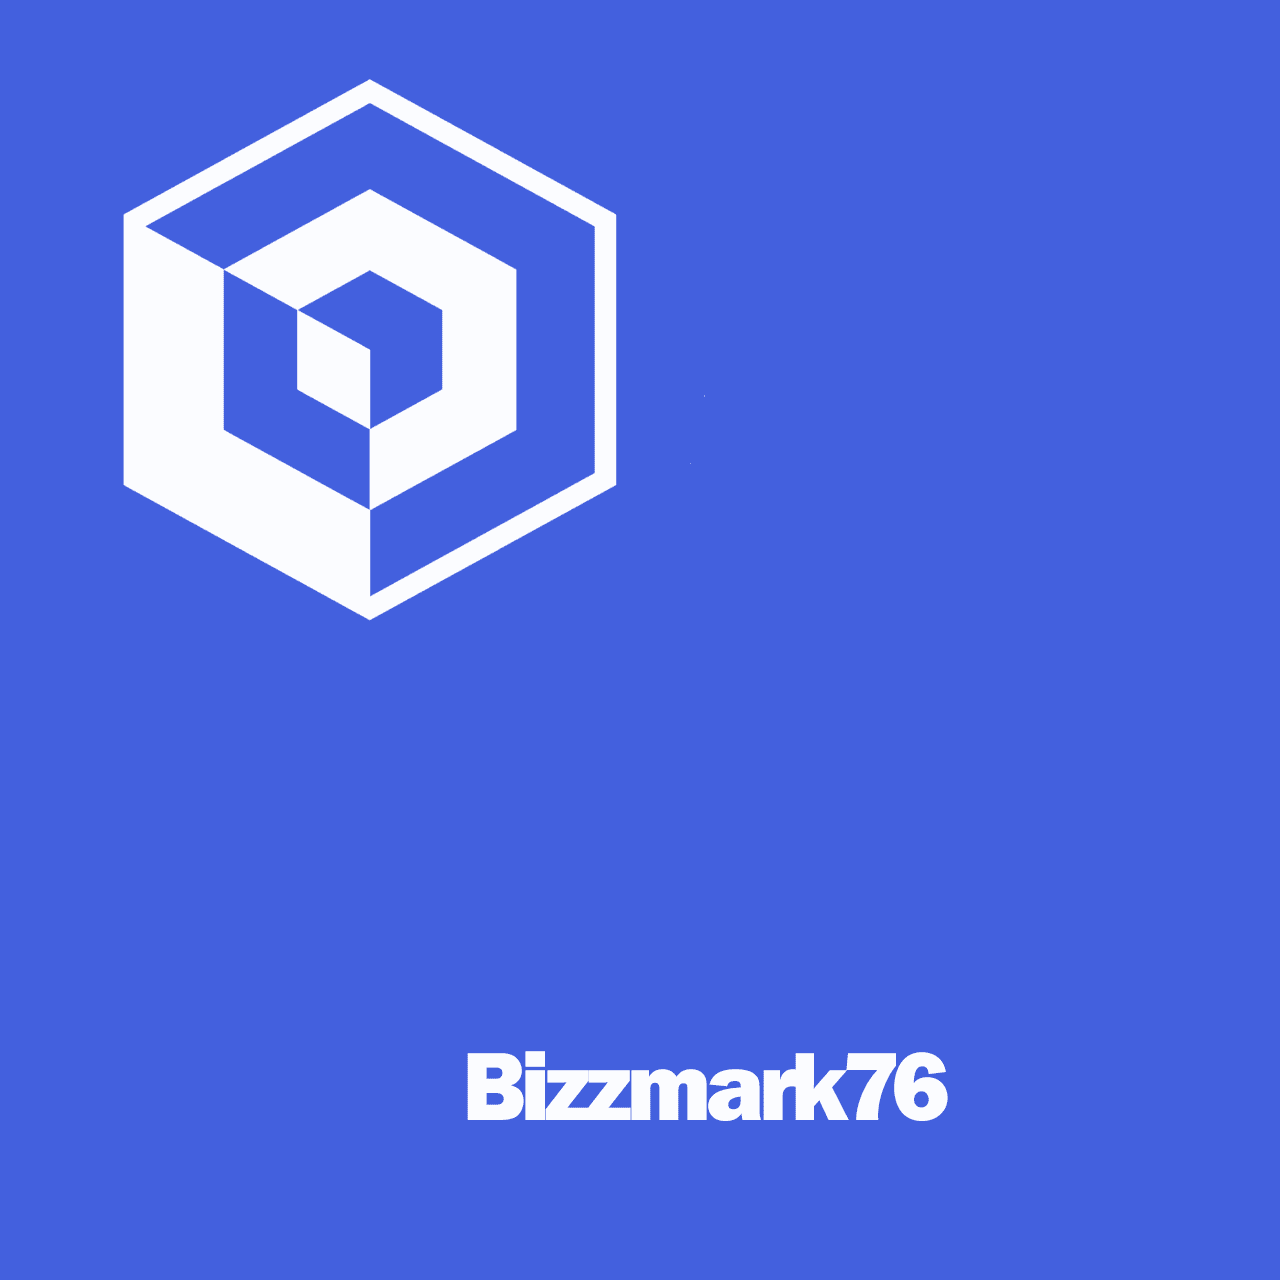 Bizzmark76